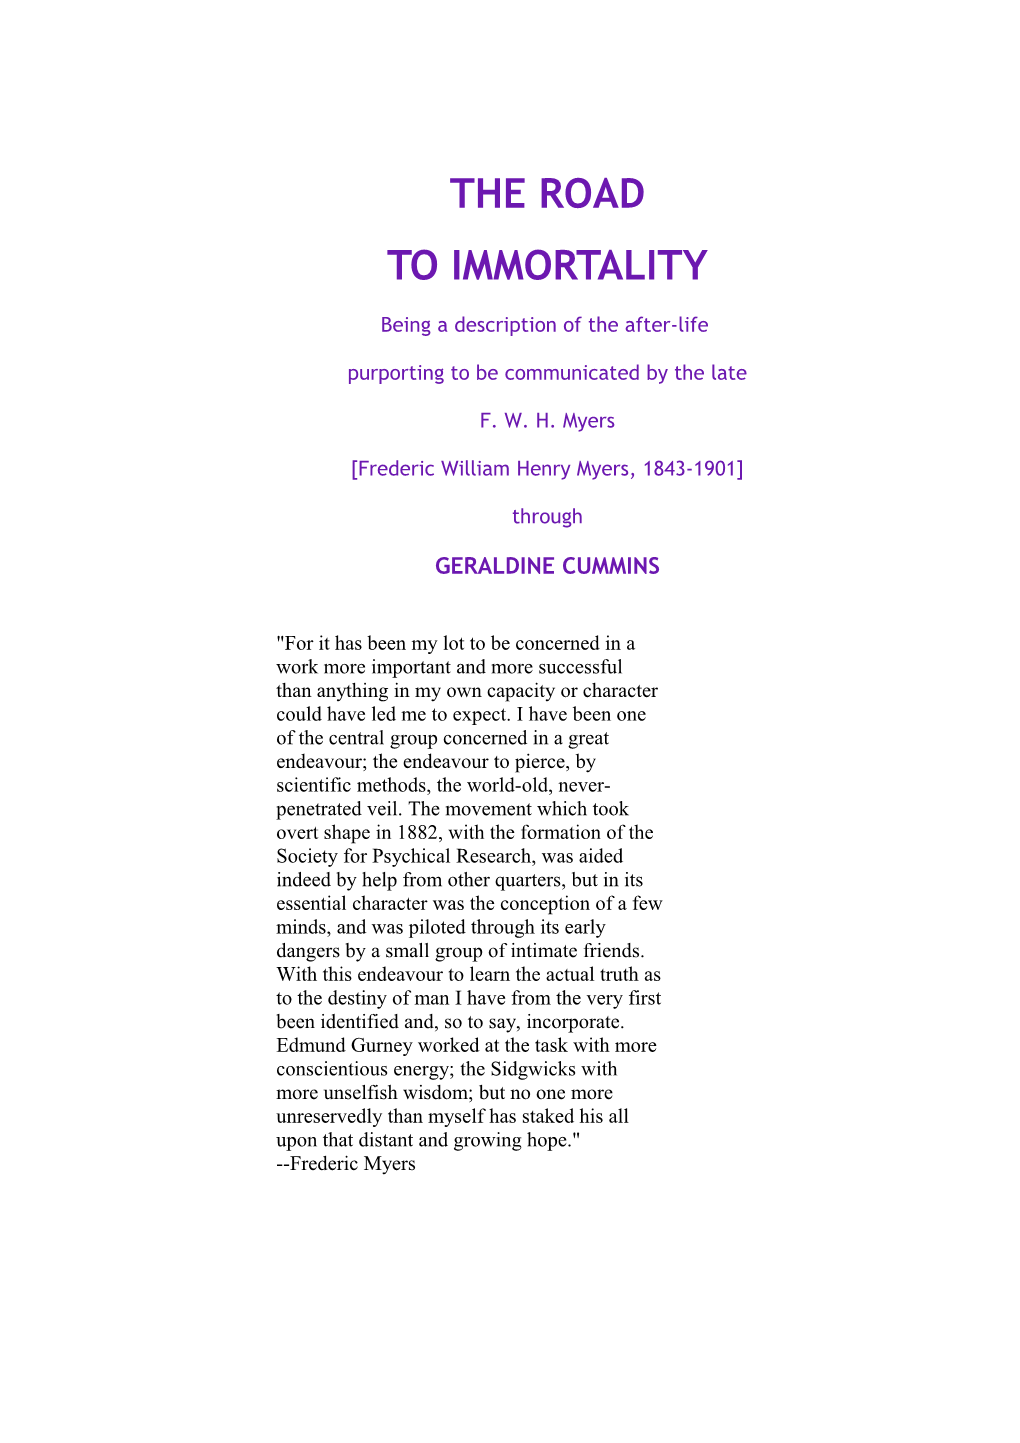 The Road to Immortality-Frederic Myers Via Geraldine Cummins FREE Ebook